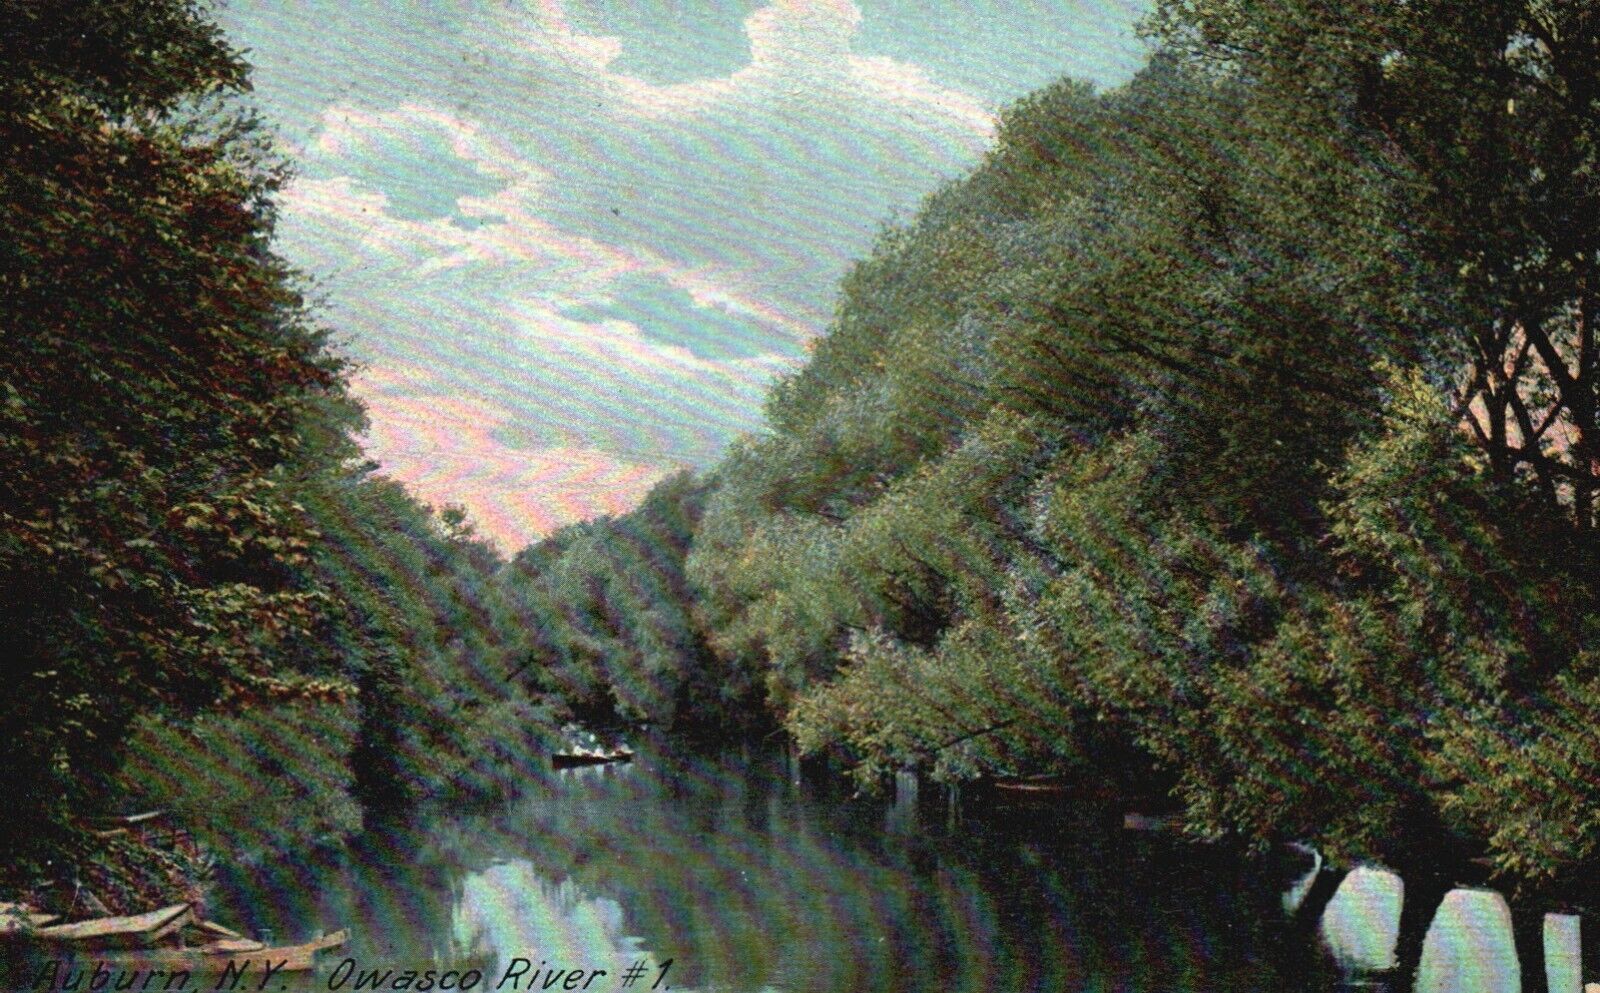 Postcard NY Auburn New York Owasco River #1 Posted 1912 Vintage PC G2673